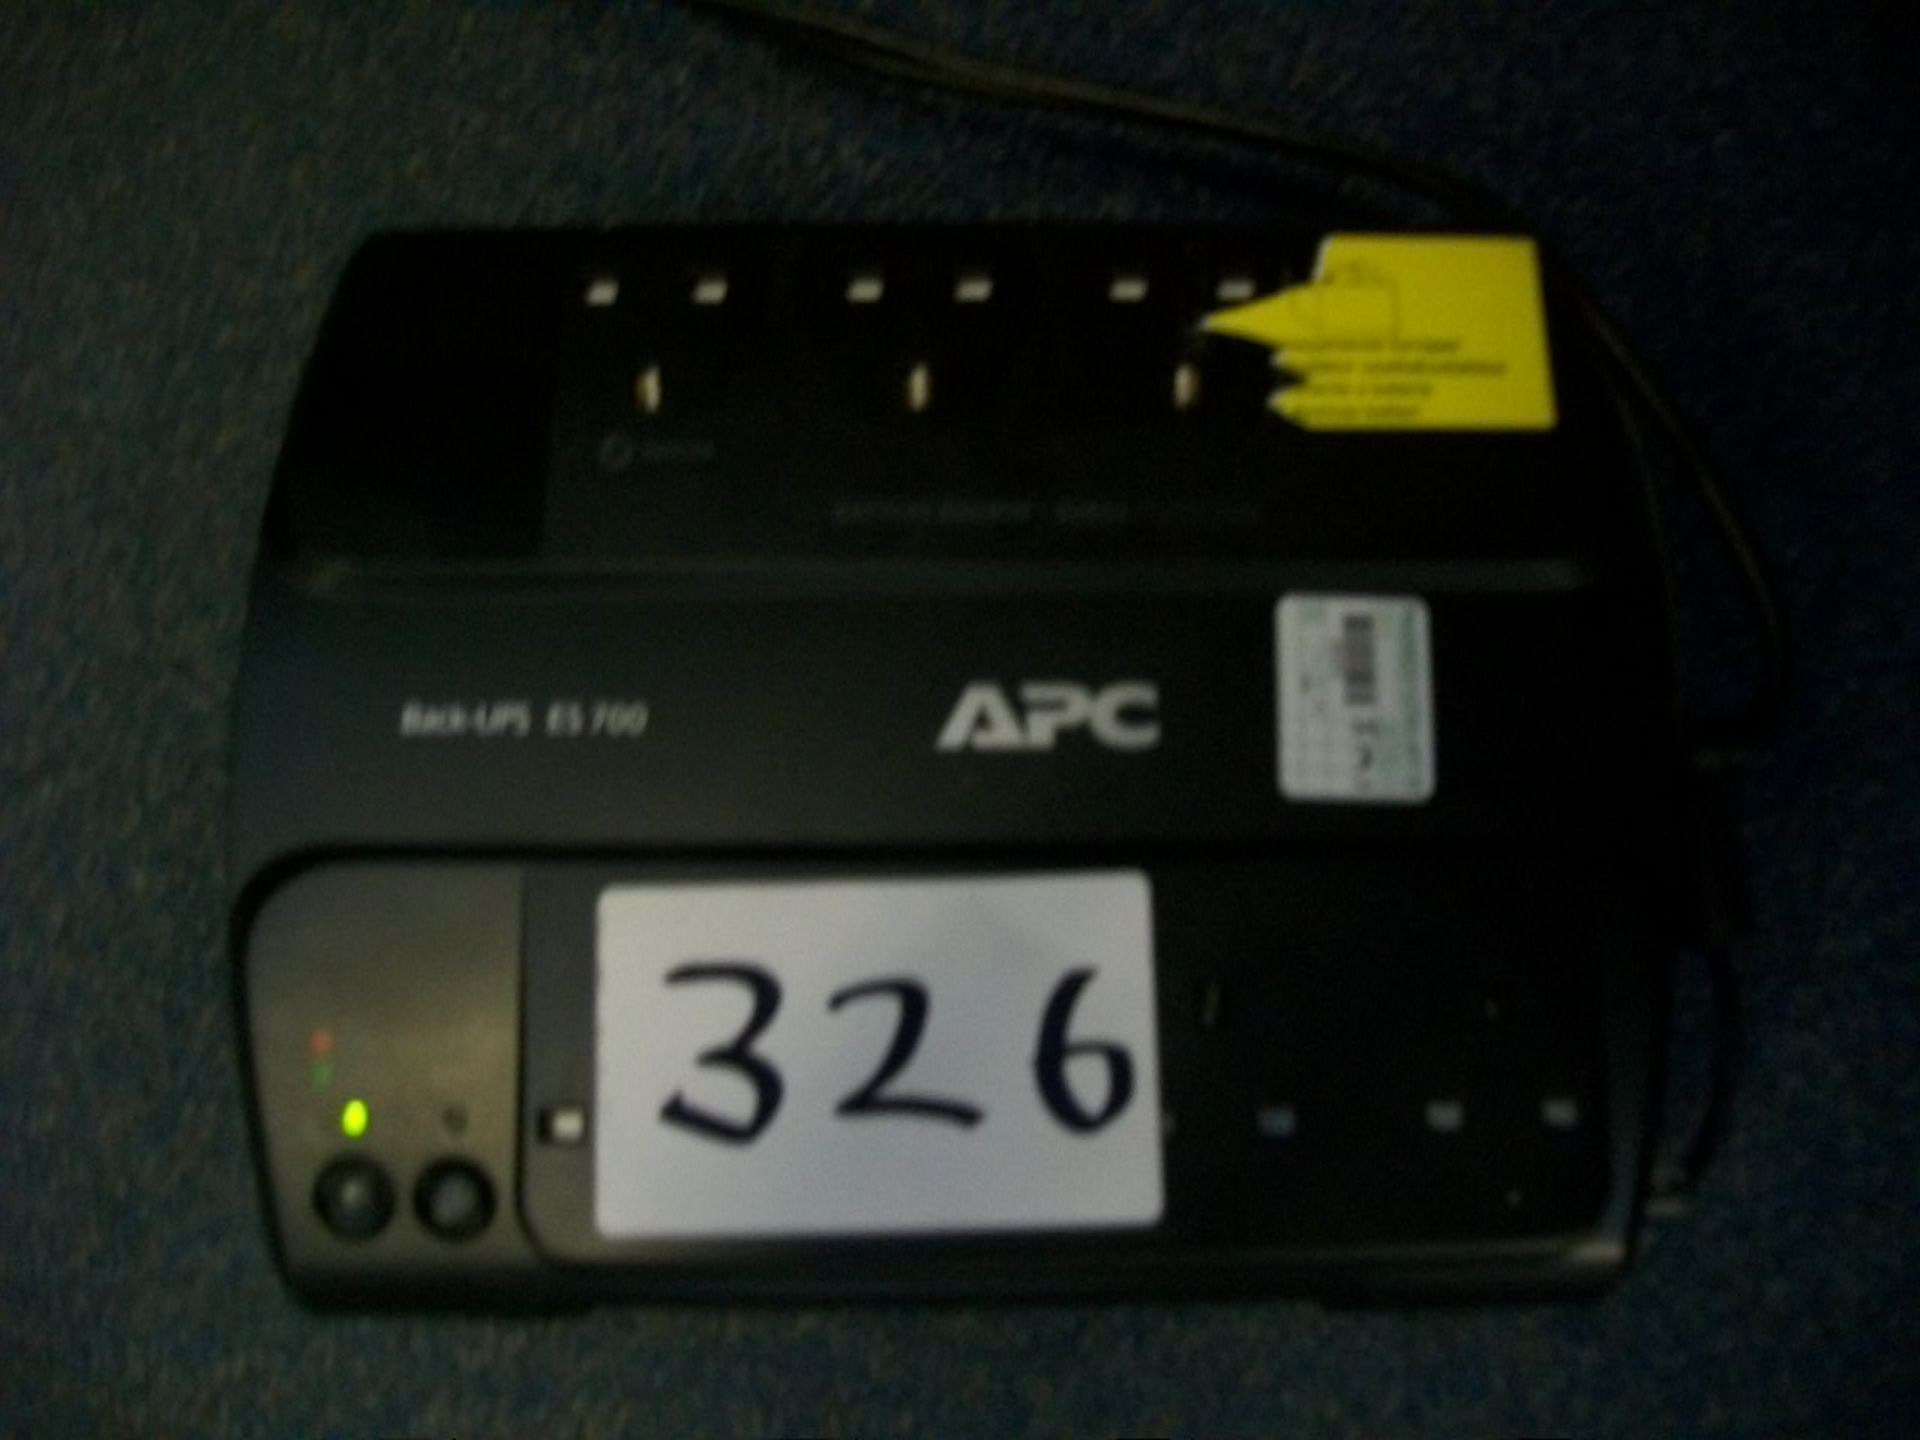 APC ES 700 series UPS SYSTEM (Situated at Arthur Amos Associates Ltd, Pool House, Algar Business